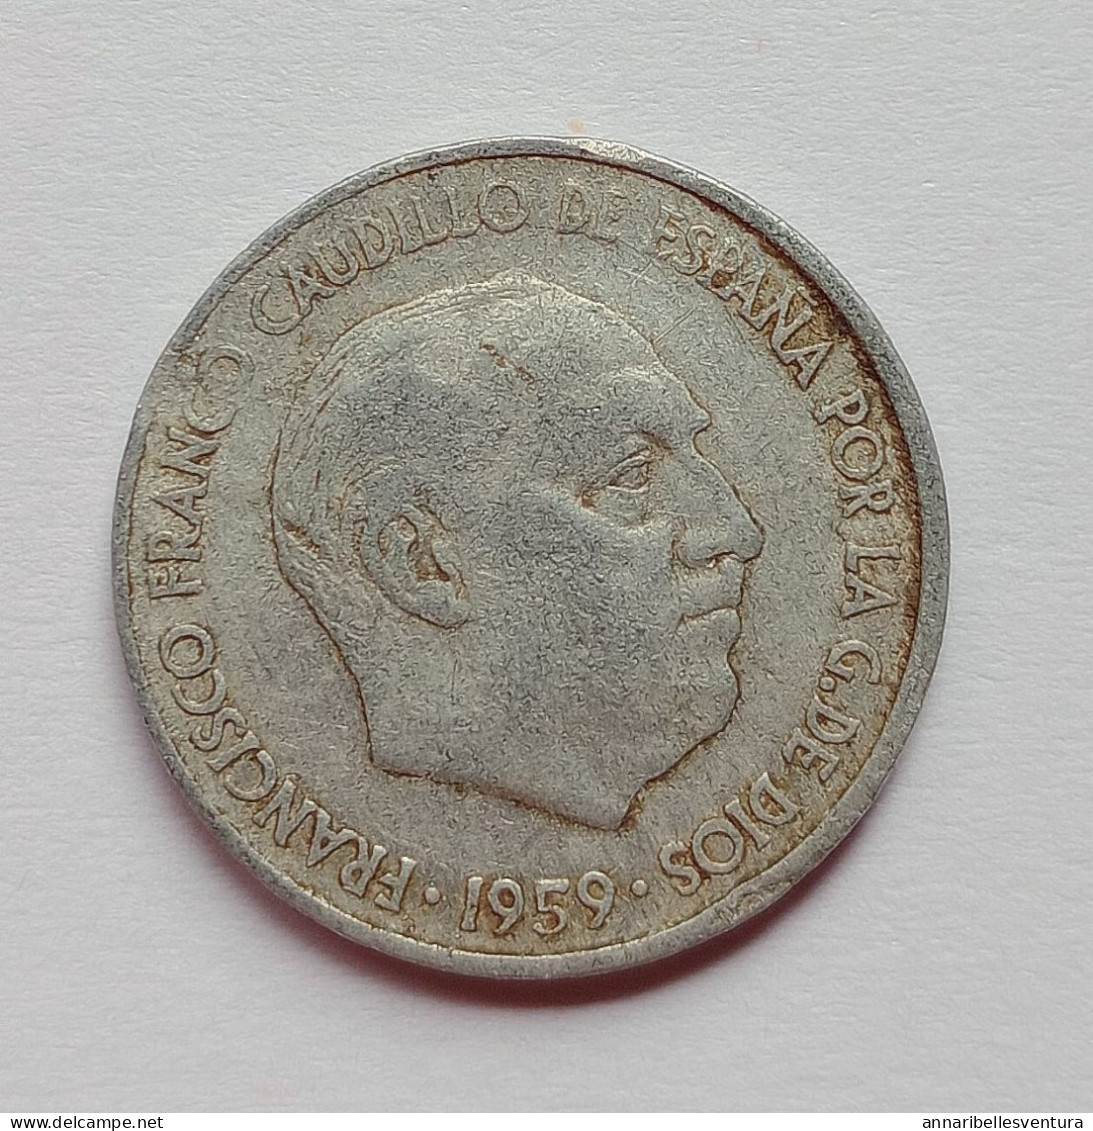 10 CÉNTIMOS 1959. FRANCISCO FRANCO. - 10 Céntimos